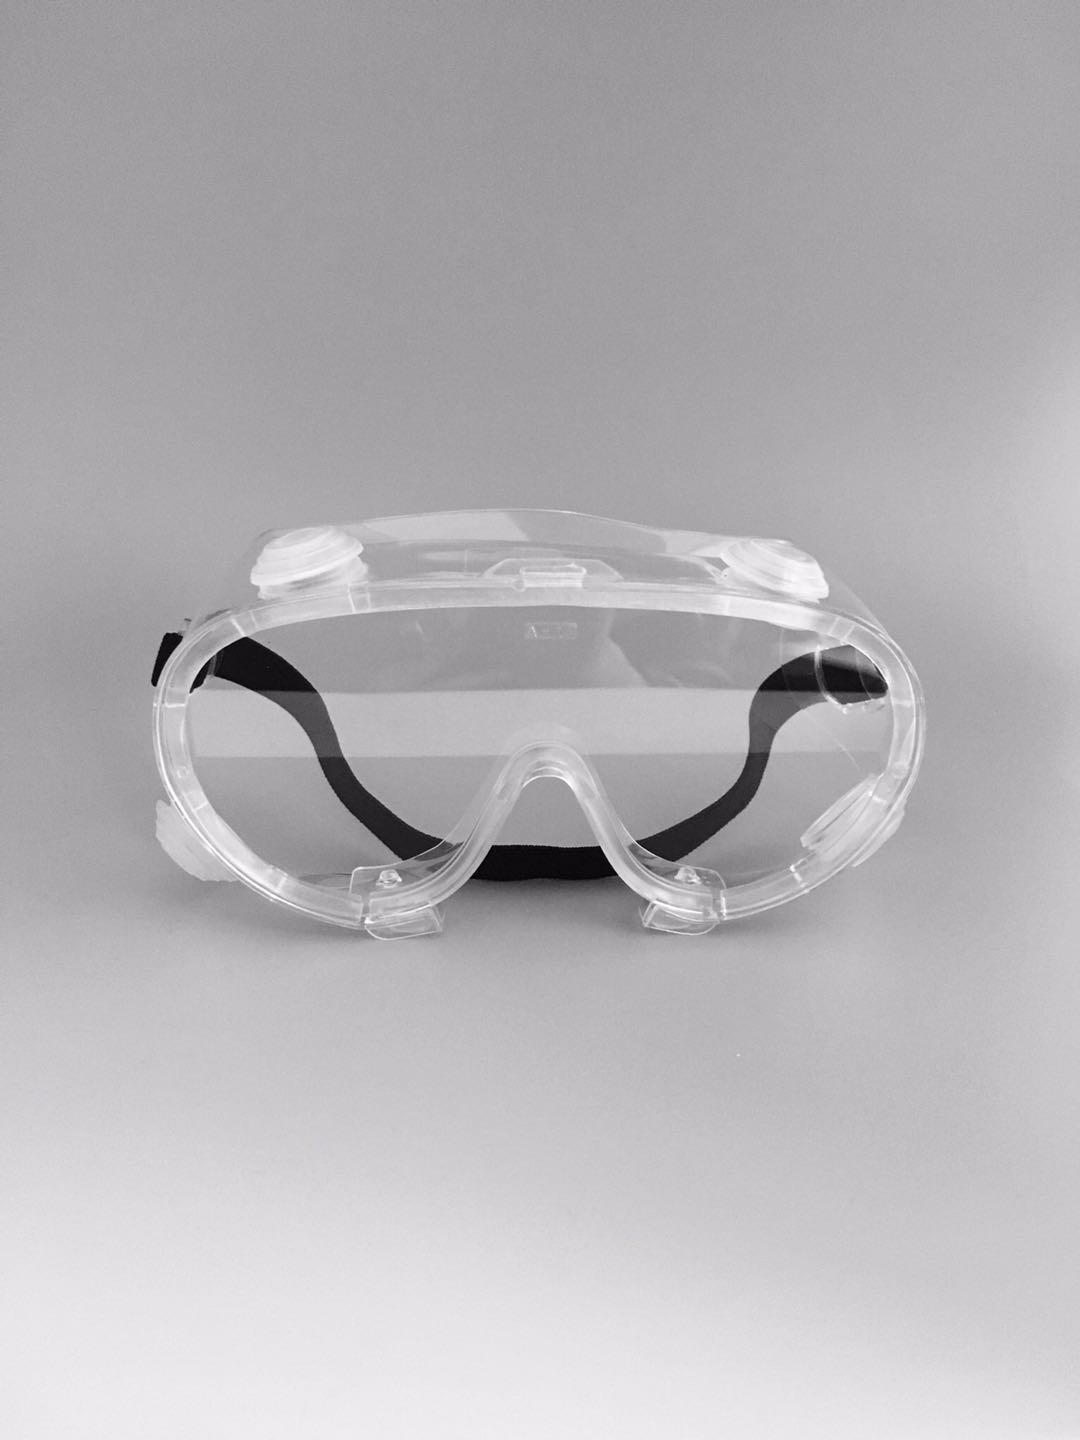 Multi-function Protective Anti-splash Goggles1